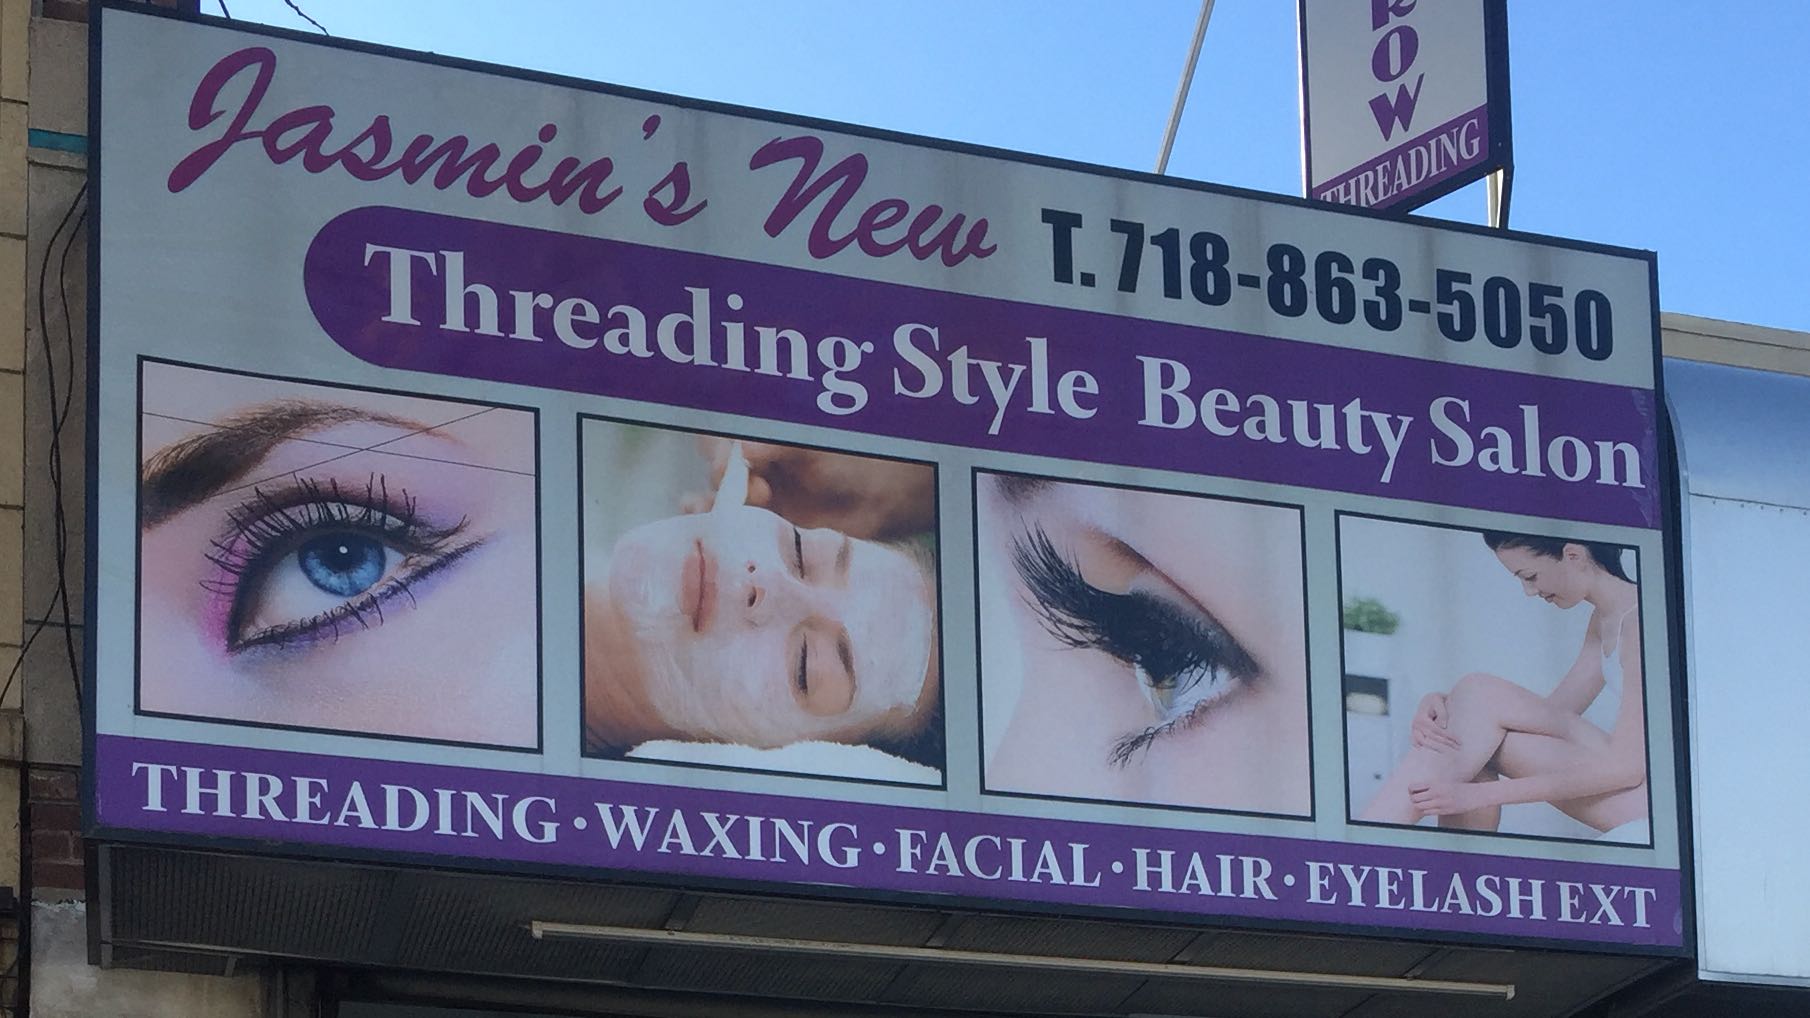 STAR threading beauty salon